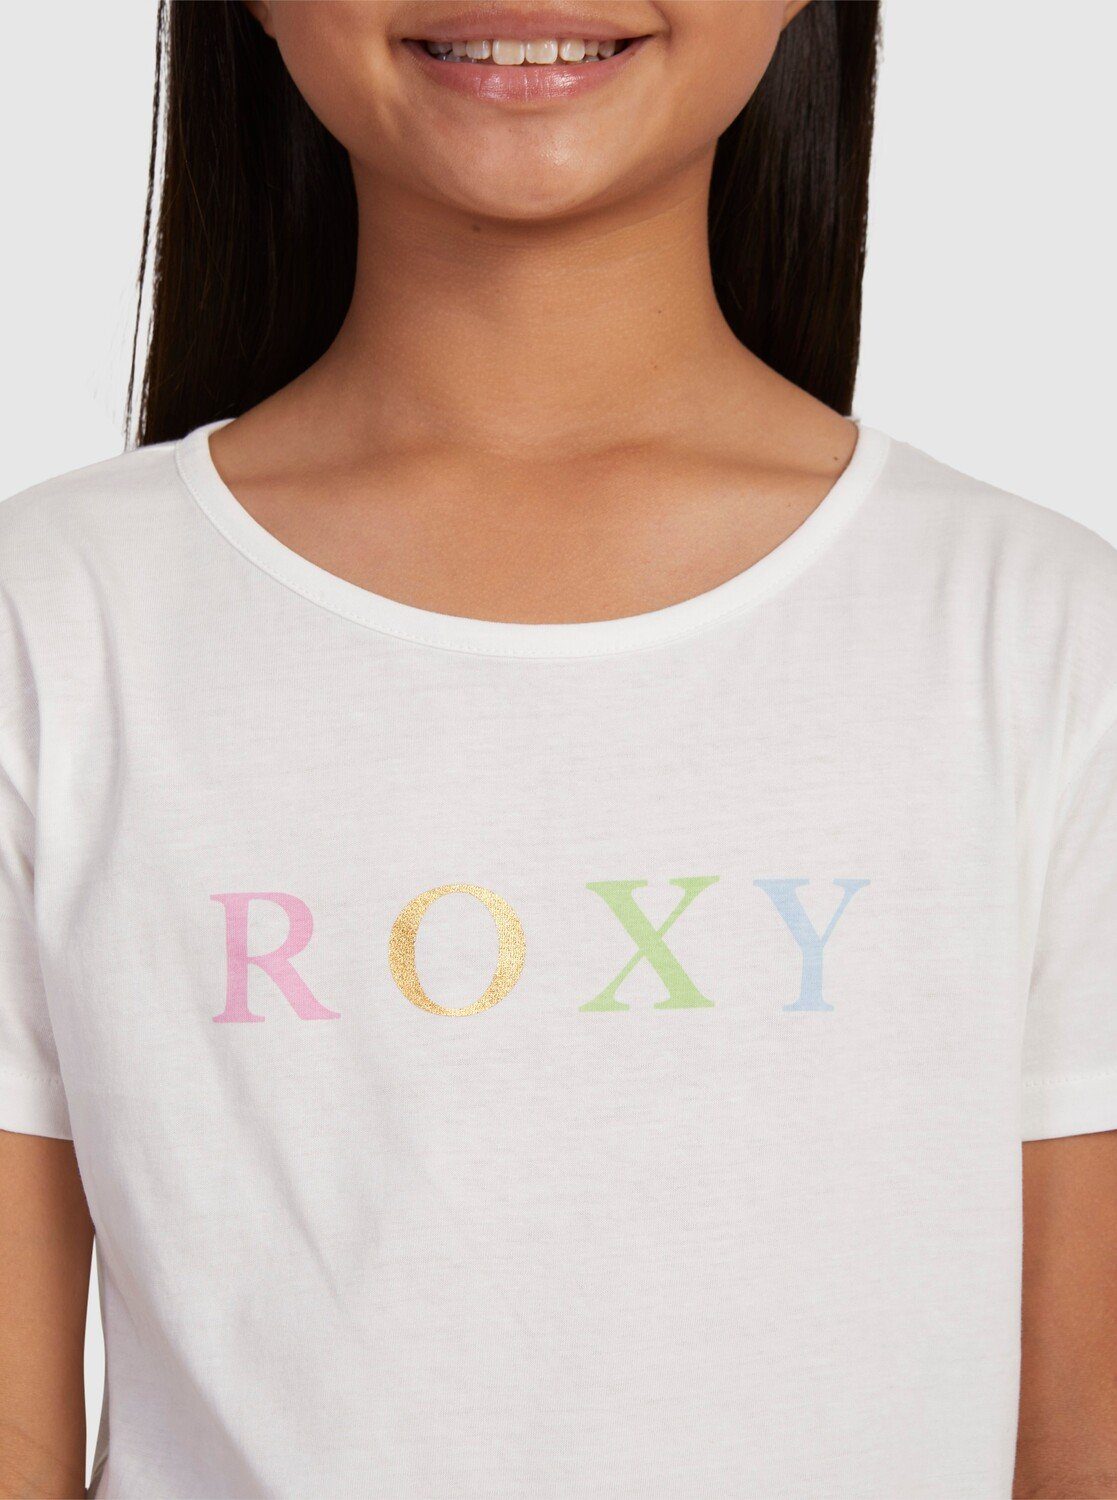 Roxy T-Shirt White Snow Day B Night And